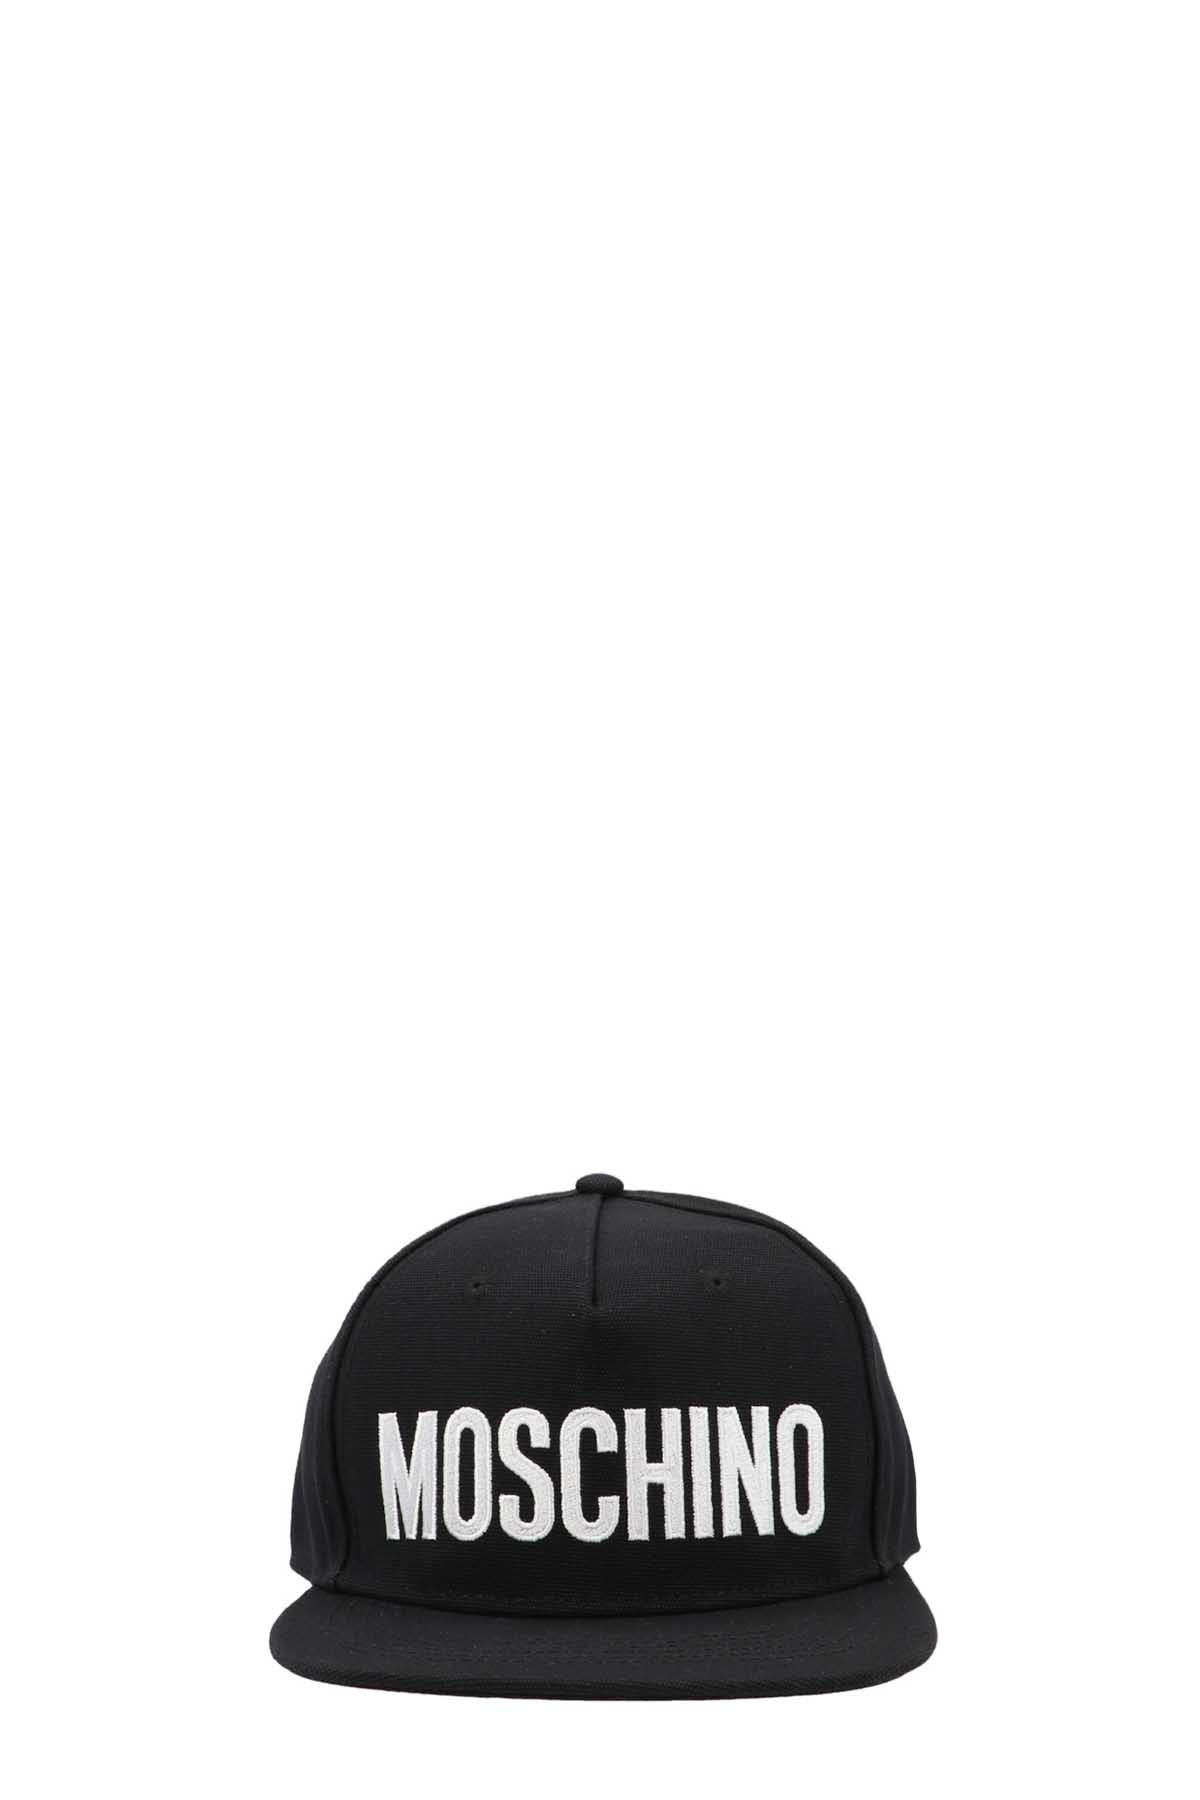 MOSCHINO 'Label' Cap